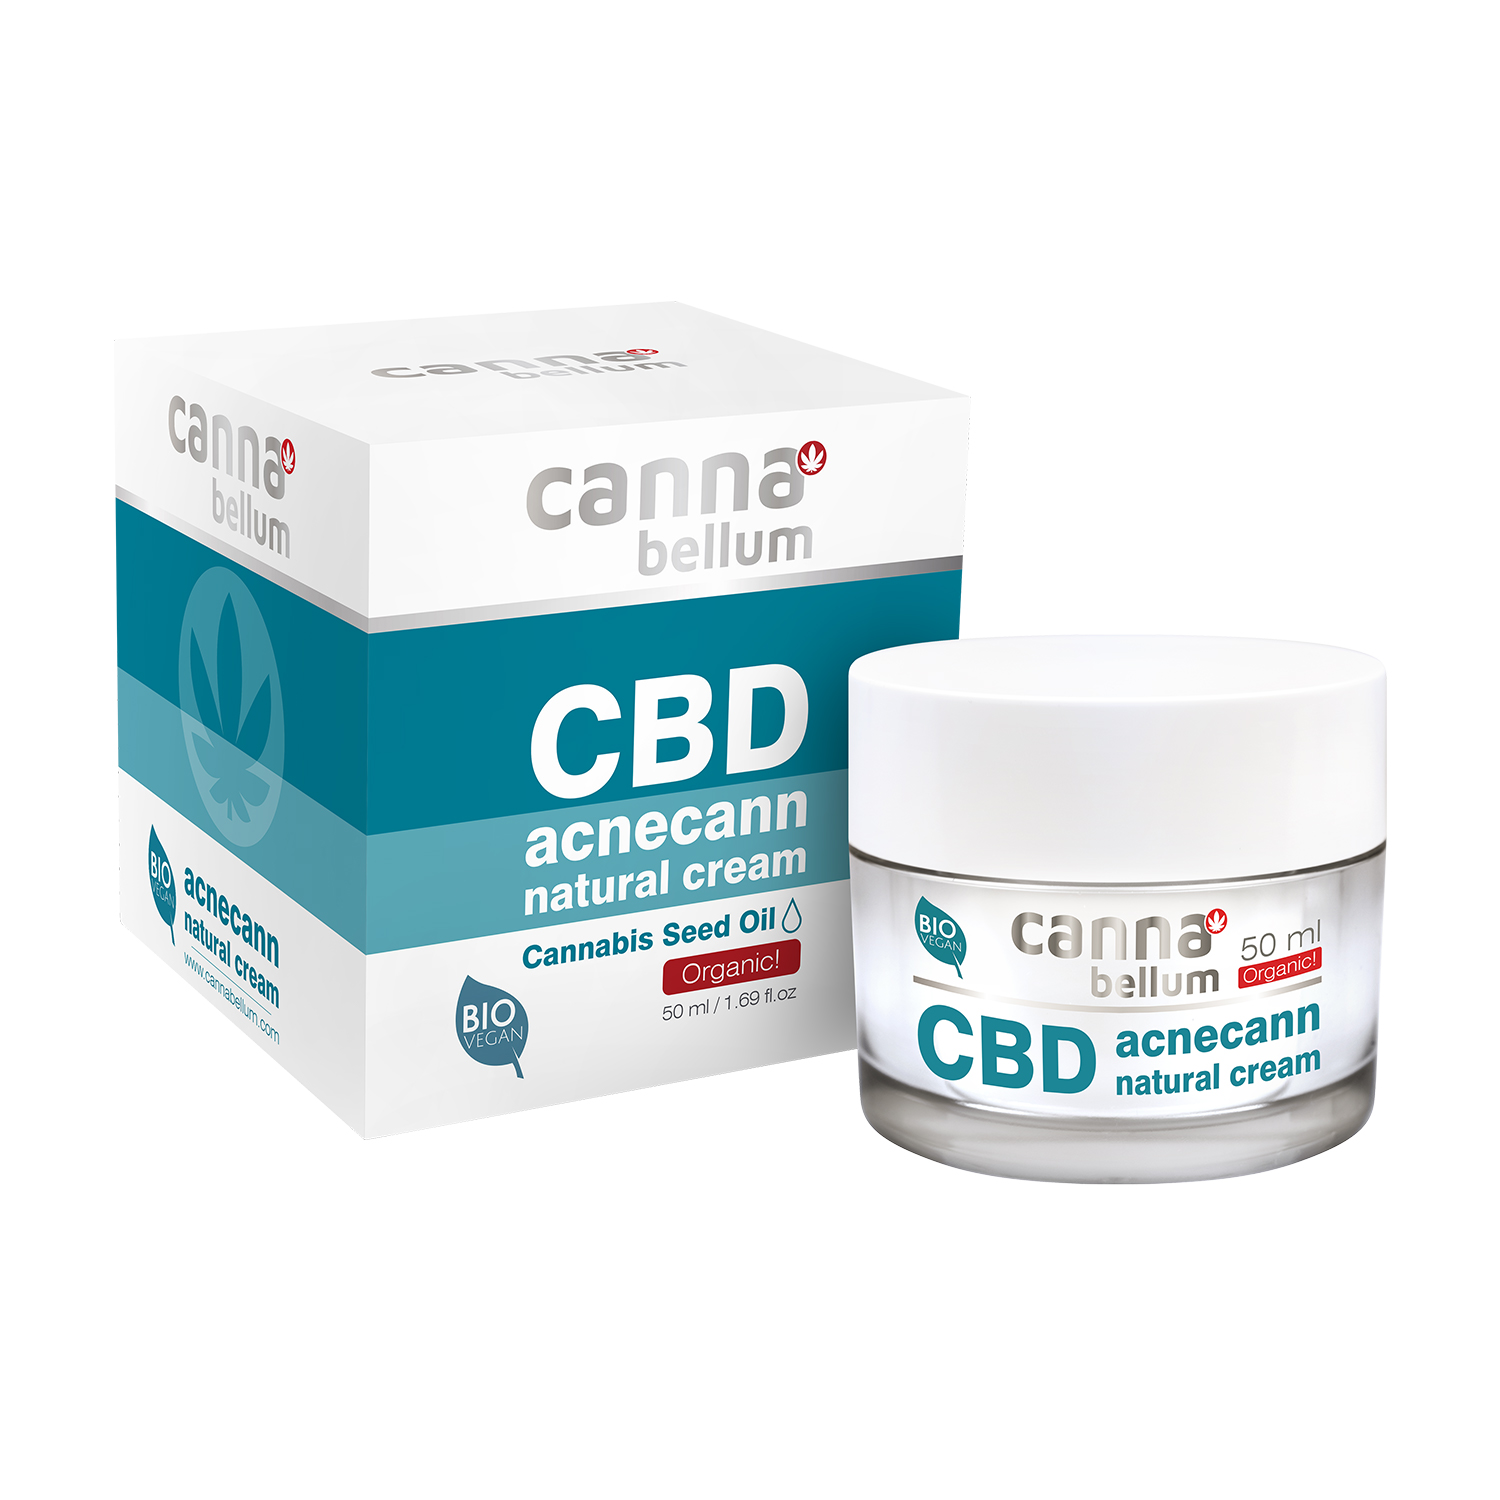 Cannabellum CBD acnecann natural cream 50ml P1244 komplet WEB 99